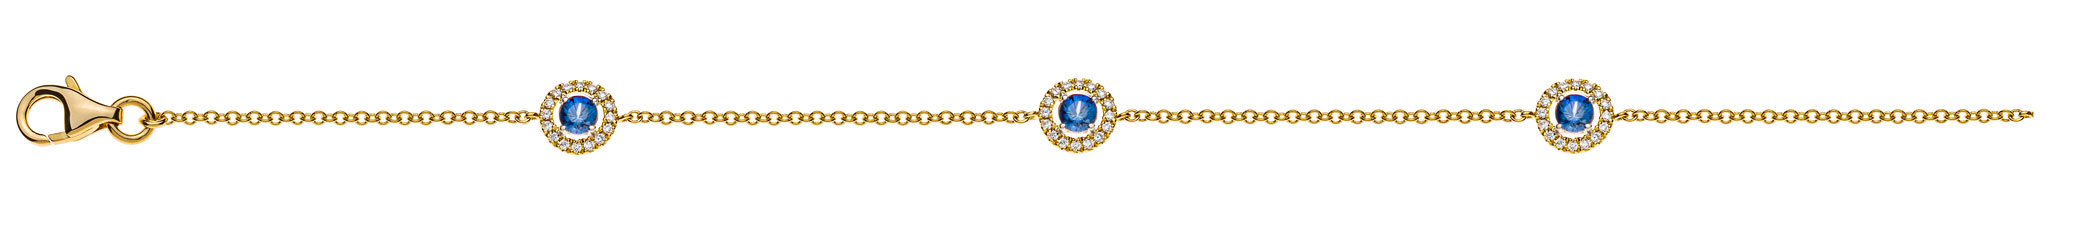 AURONOS Prestige Armband 18K Gelbgold Saphir Diamant 19cm